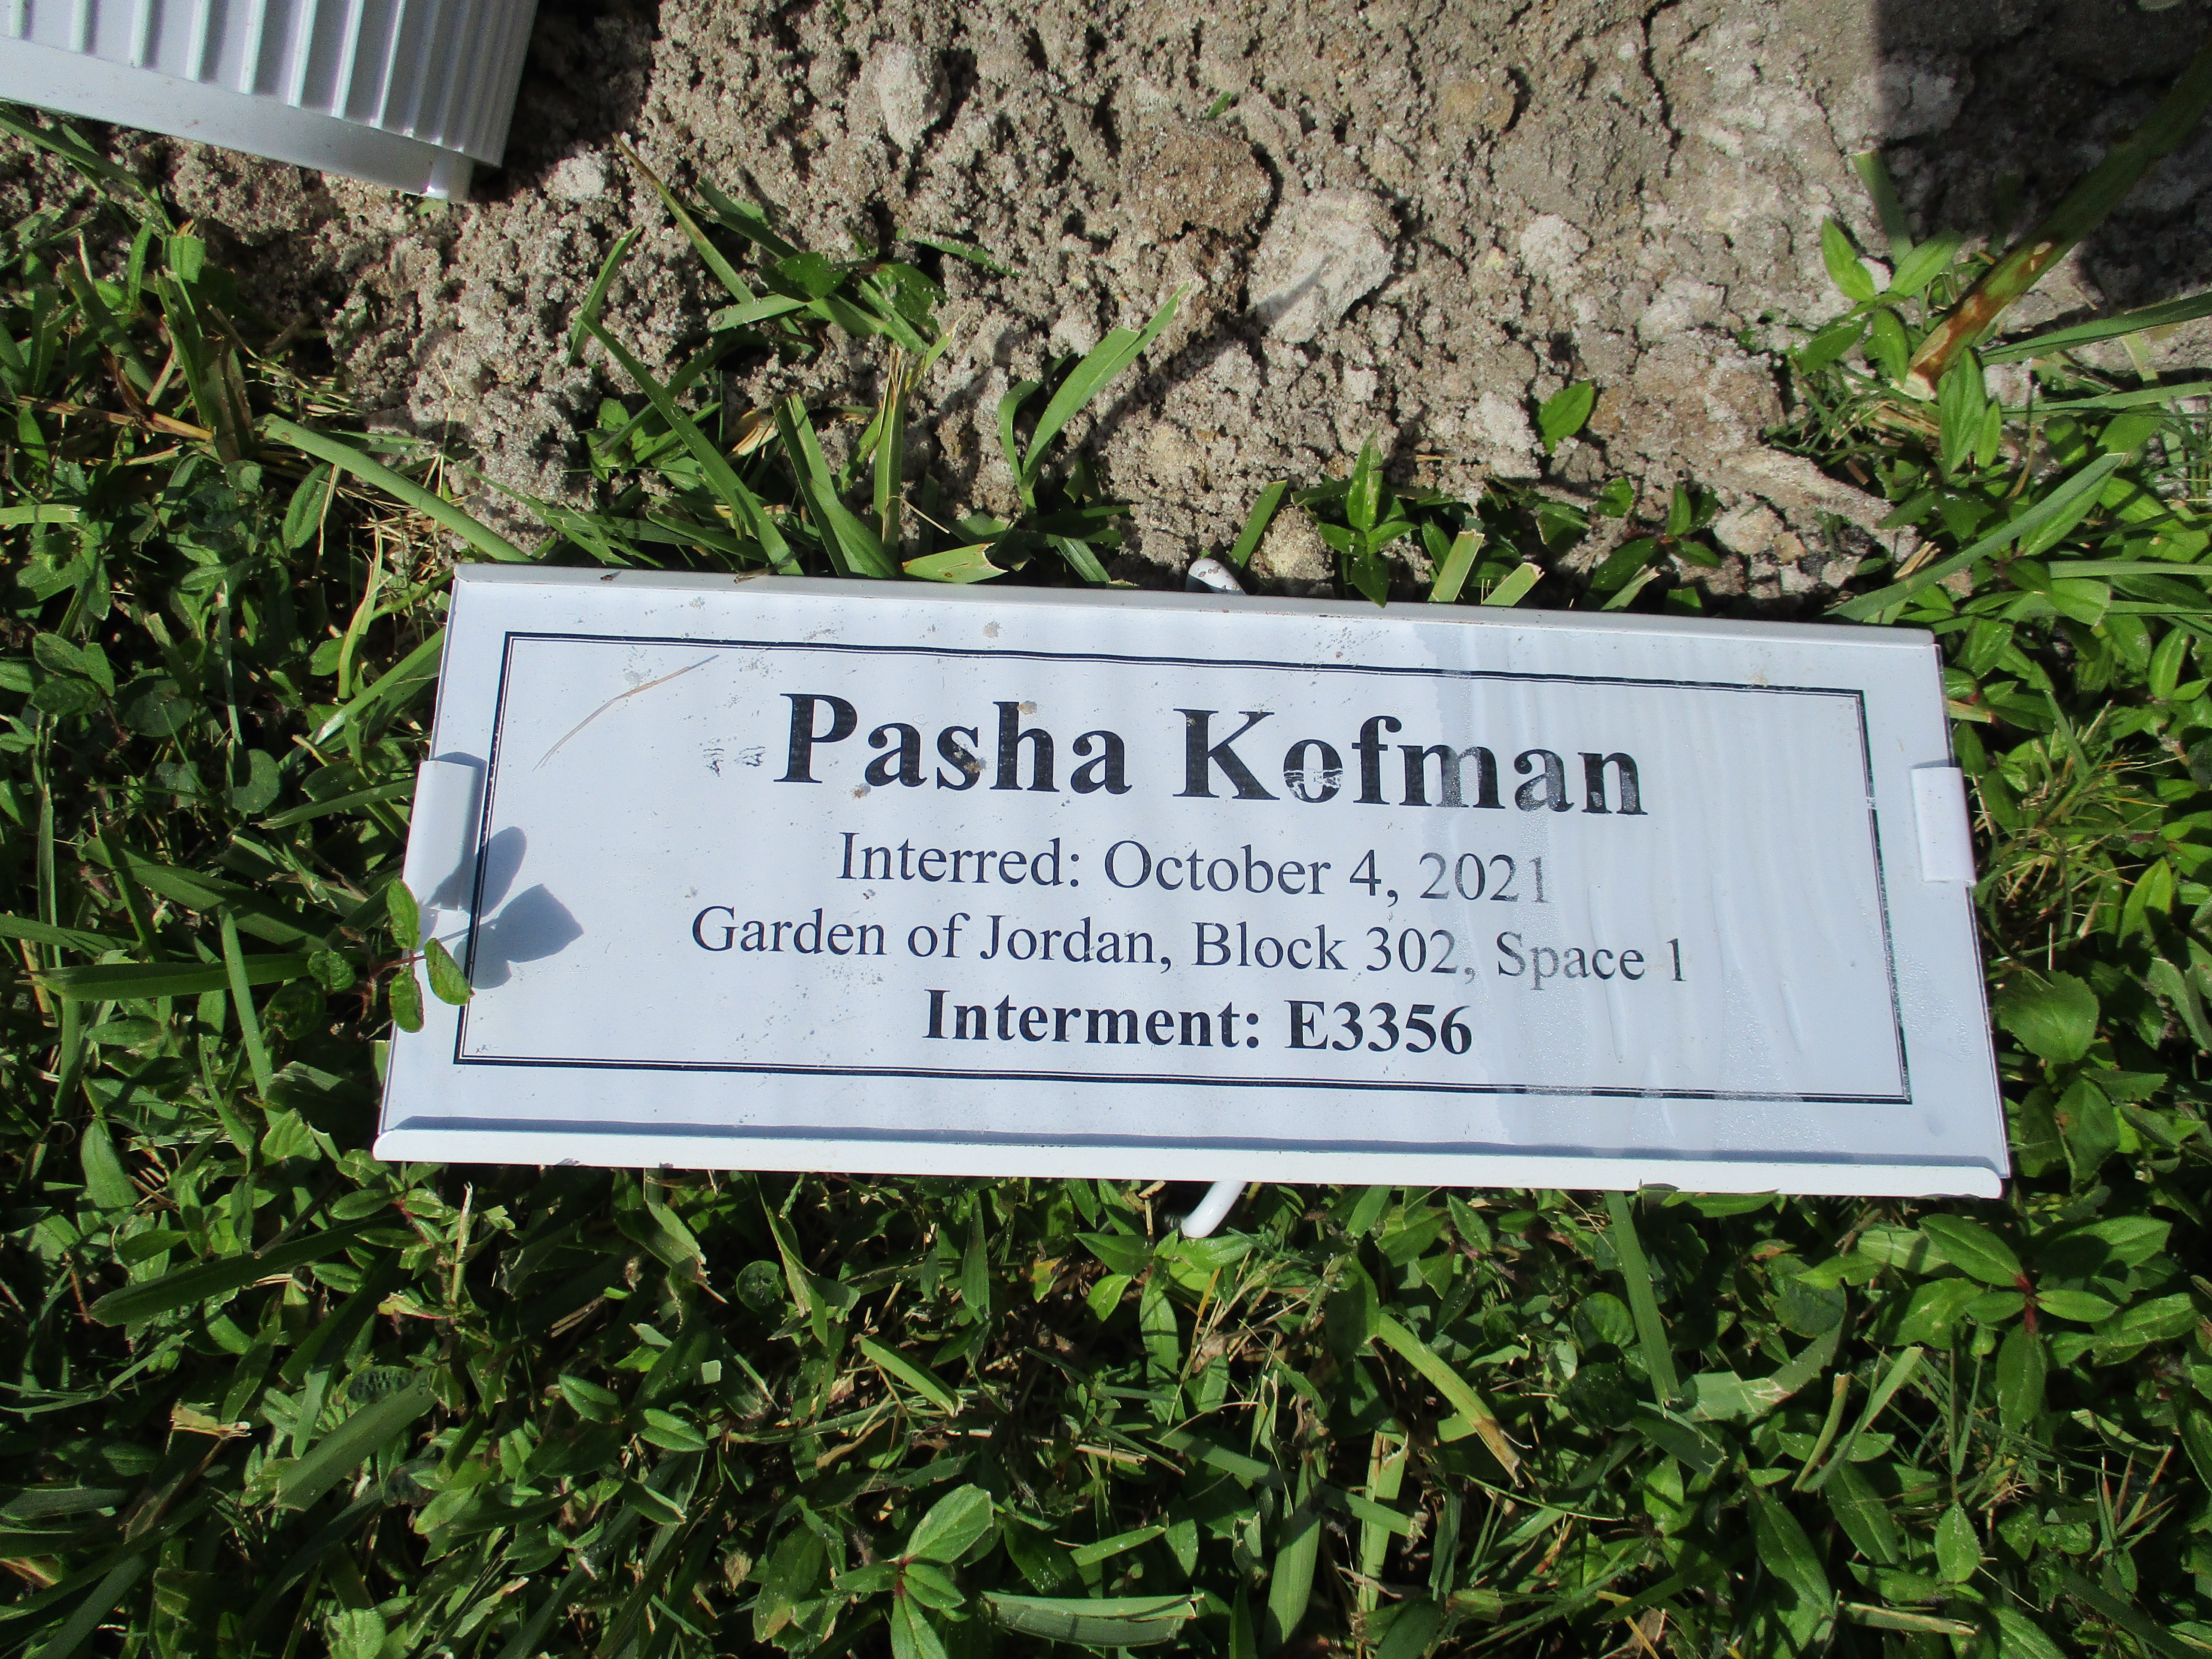 Pasha Kofman